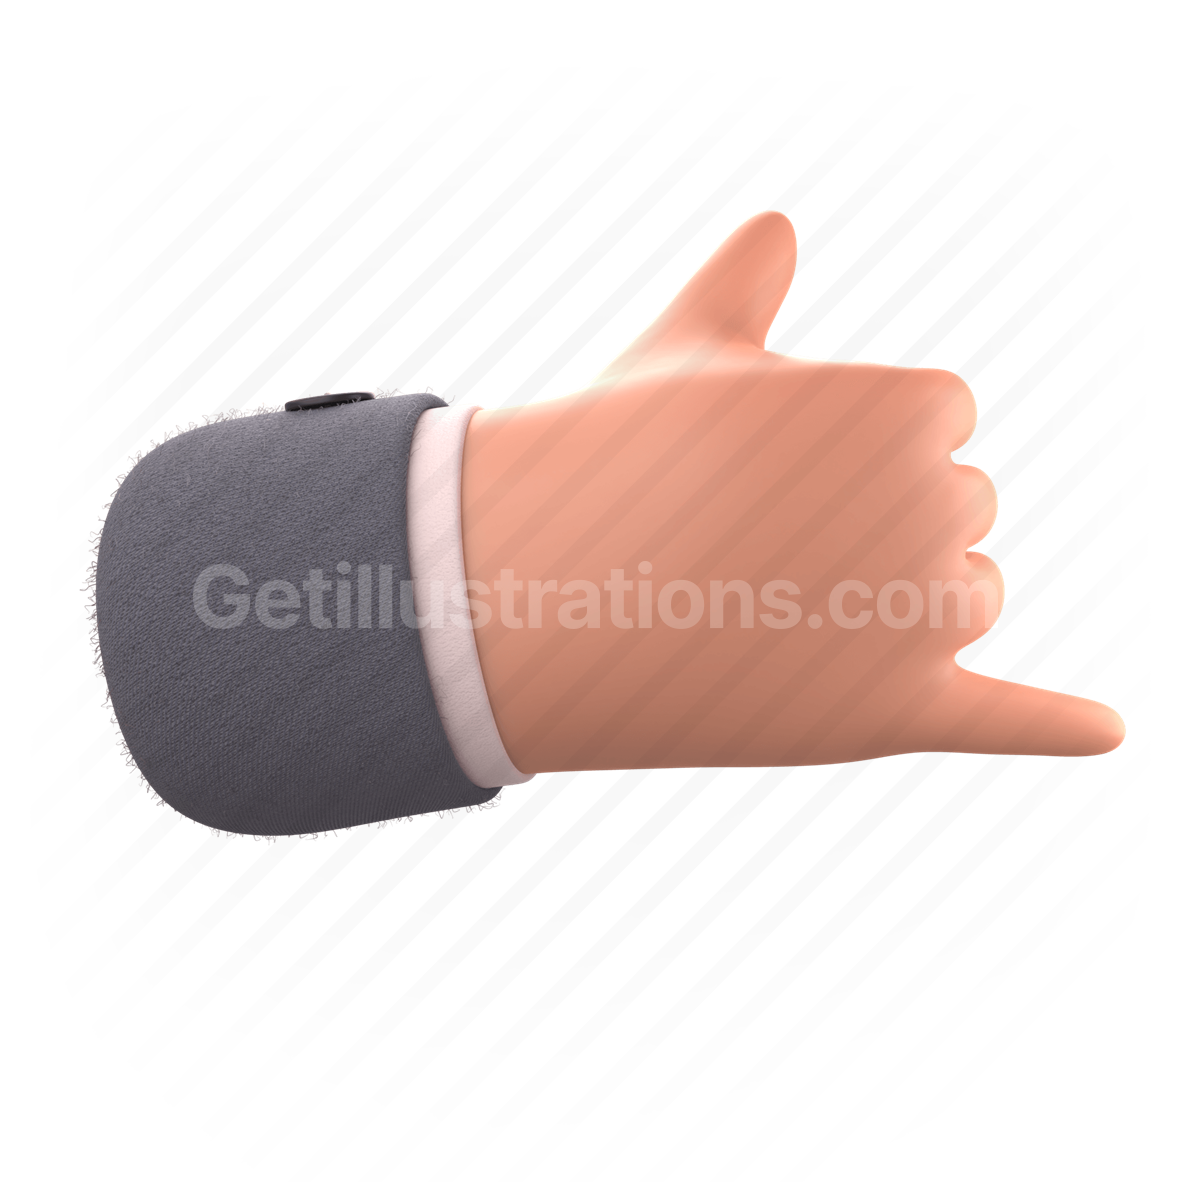 hand gestures, hand, gesture, emoticon, emoji,  finger, fingers, hang loose, greeting, suit, light